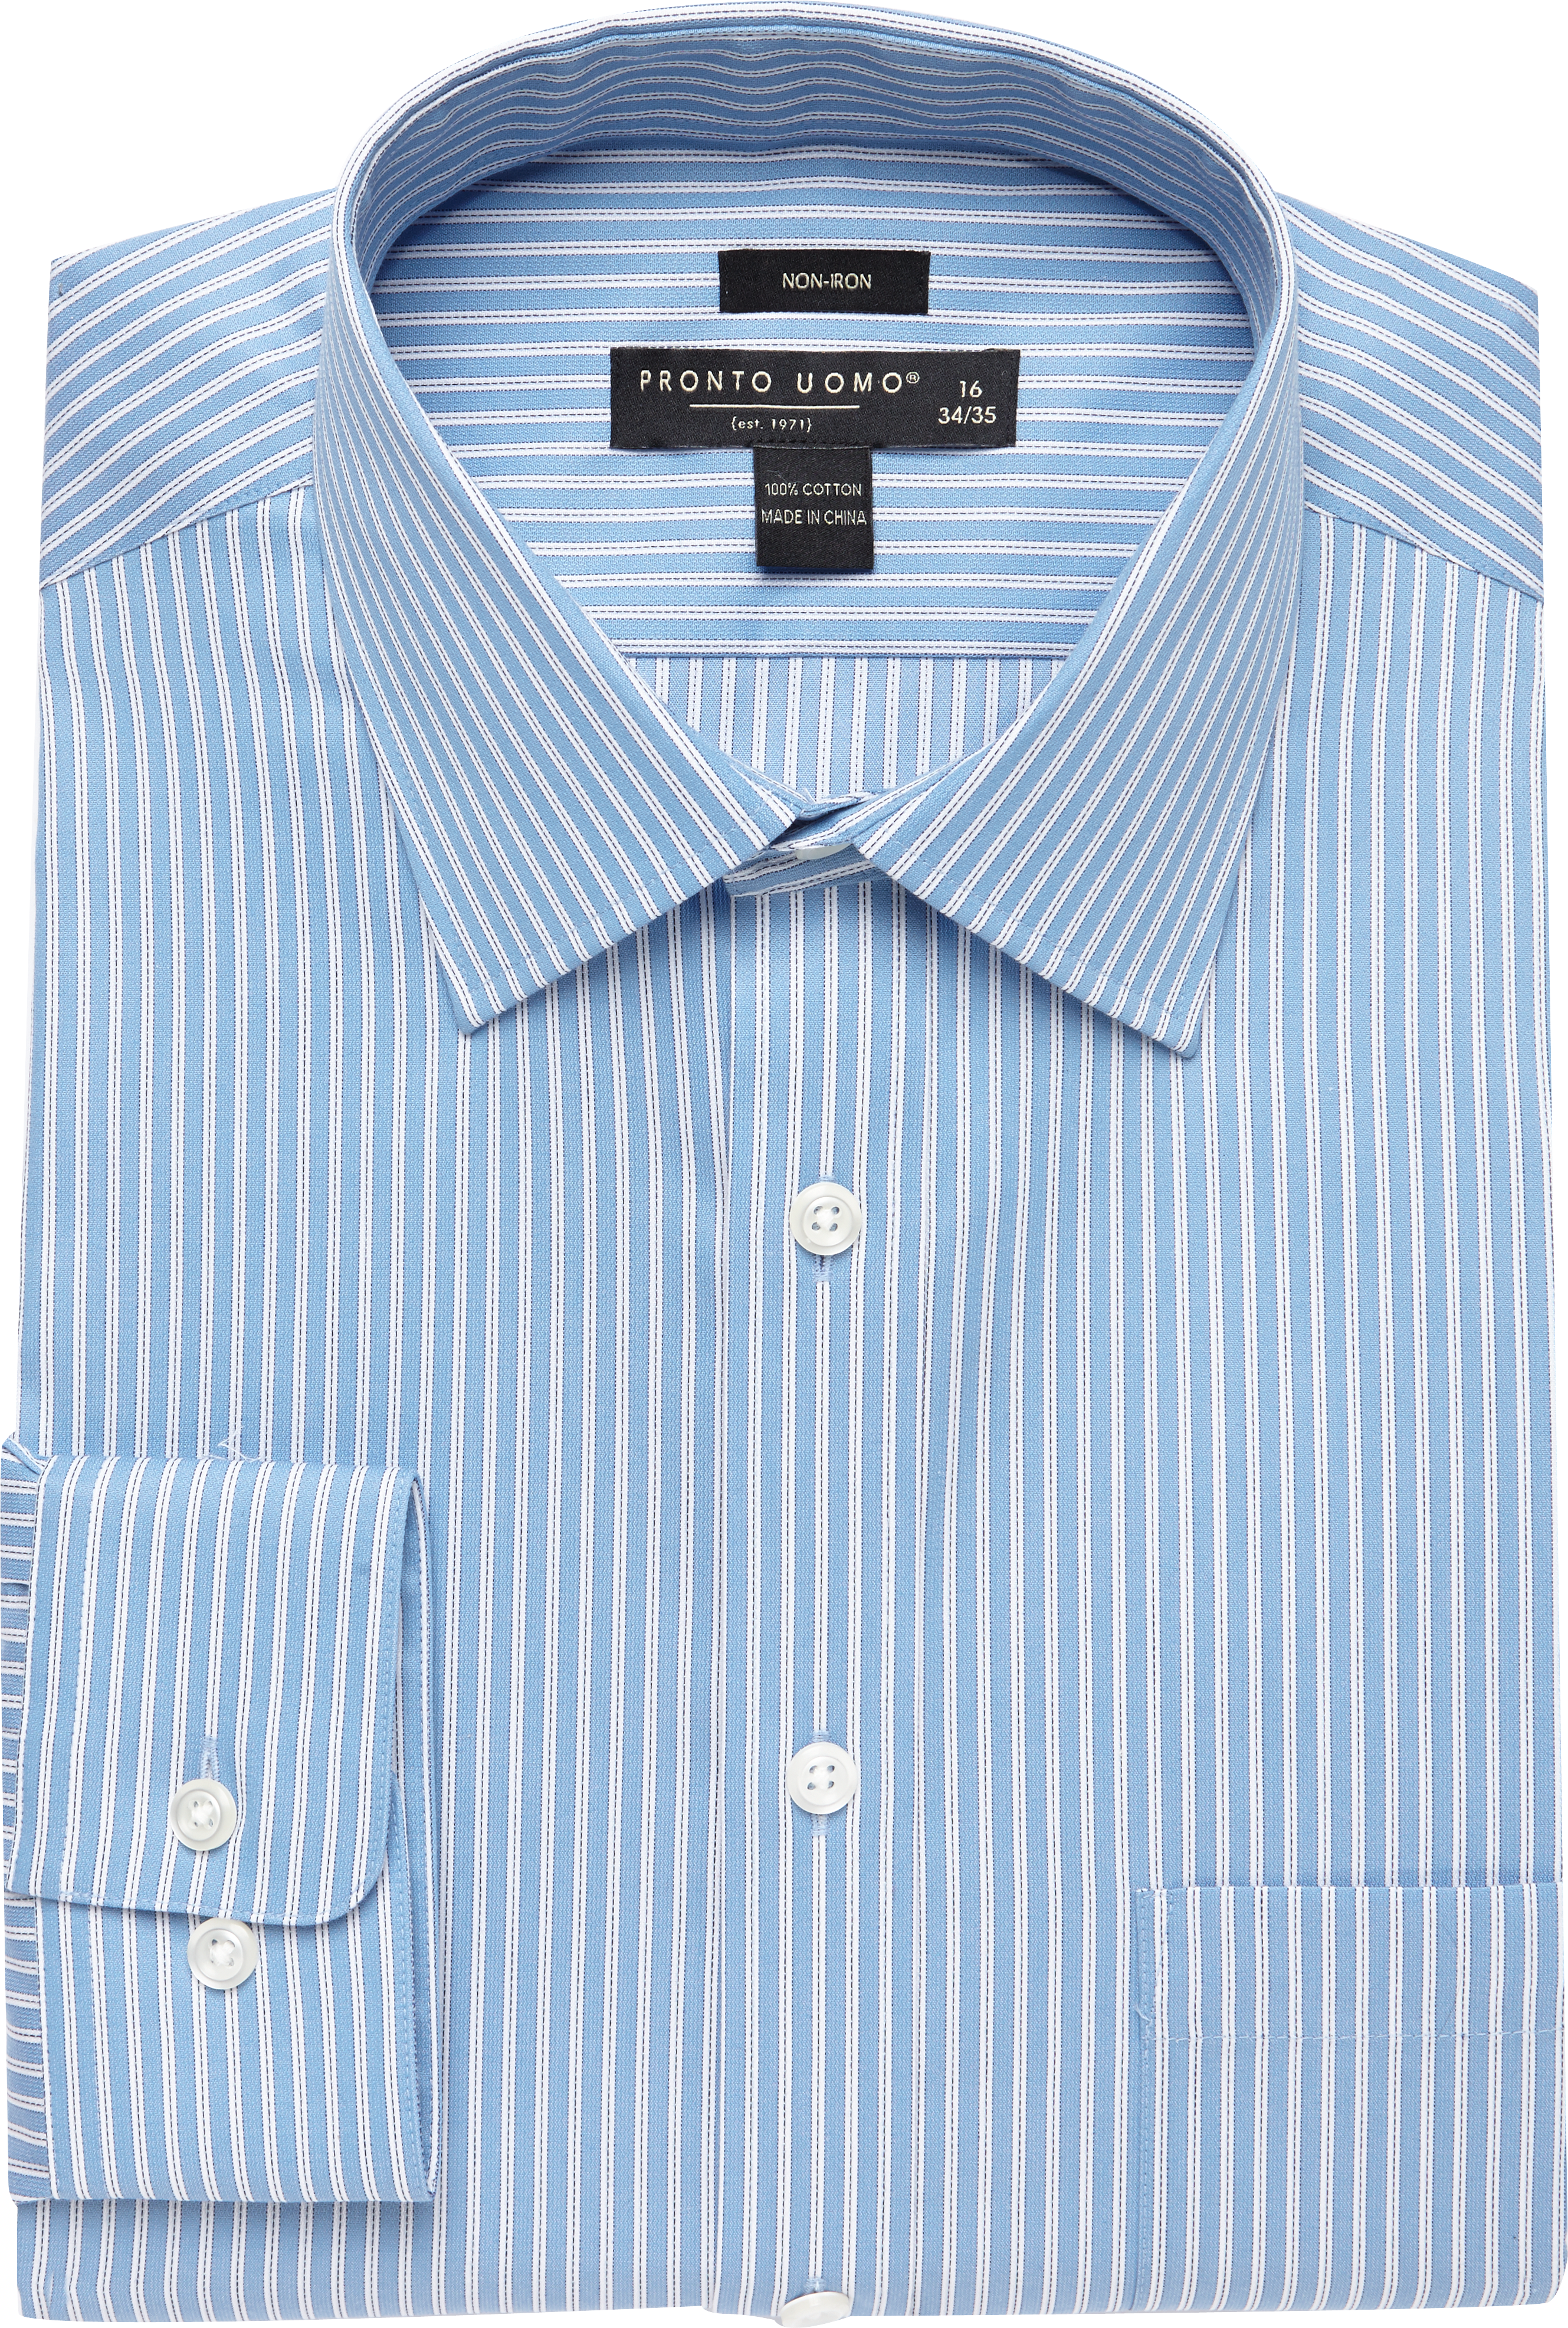 Pronto Uomo Blue Stripe Dress Shirt - Men's Sale | Men's Wearhouse